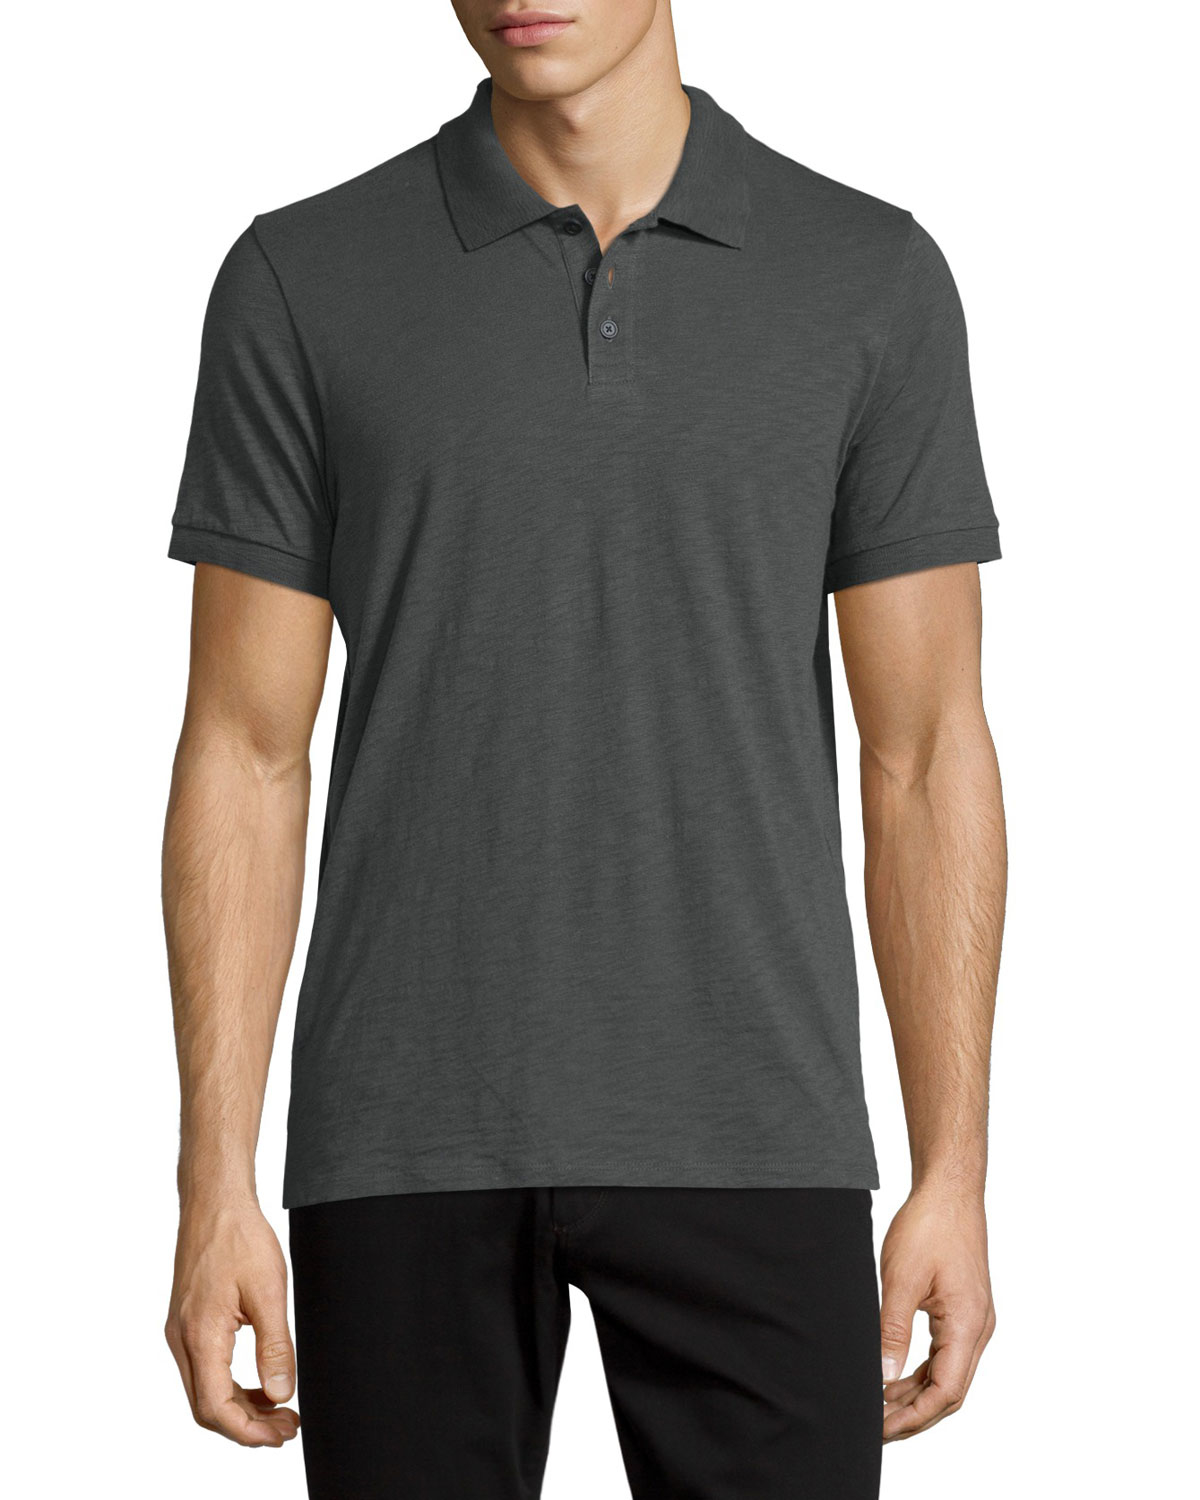 Lyst - Vince Short-sleeve Slub Polo Shirt in Gray for Men